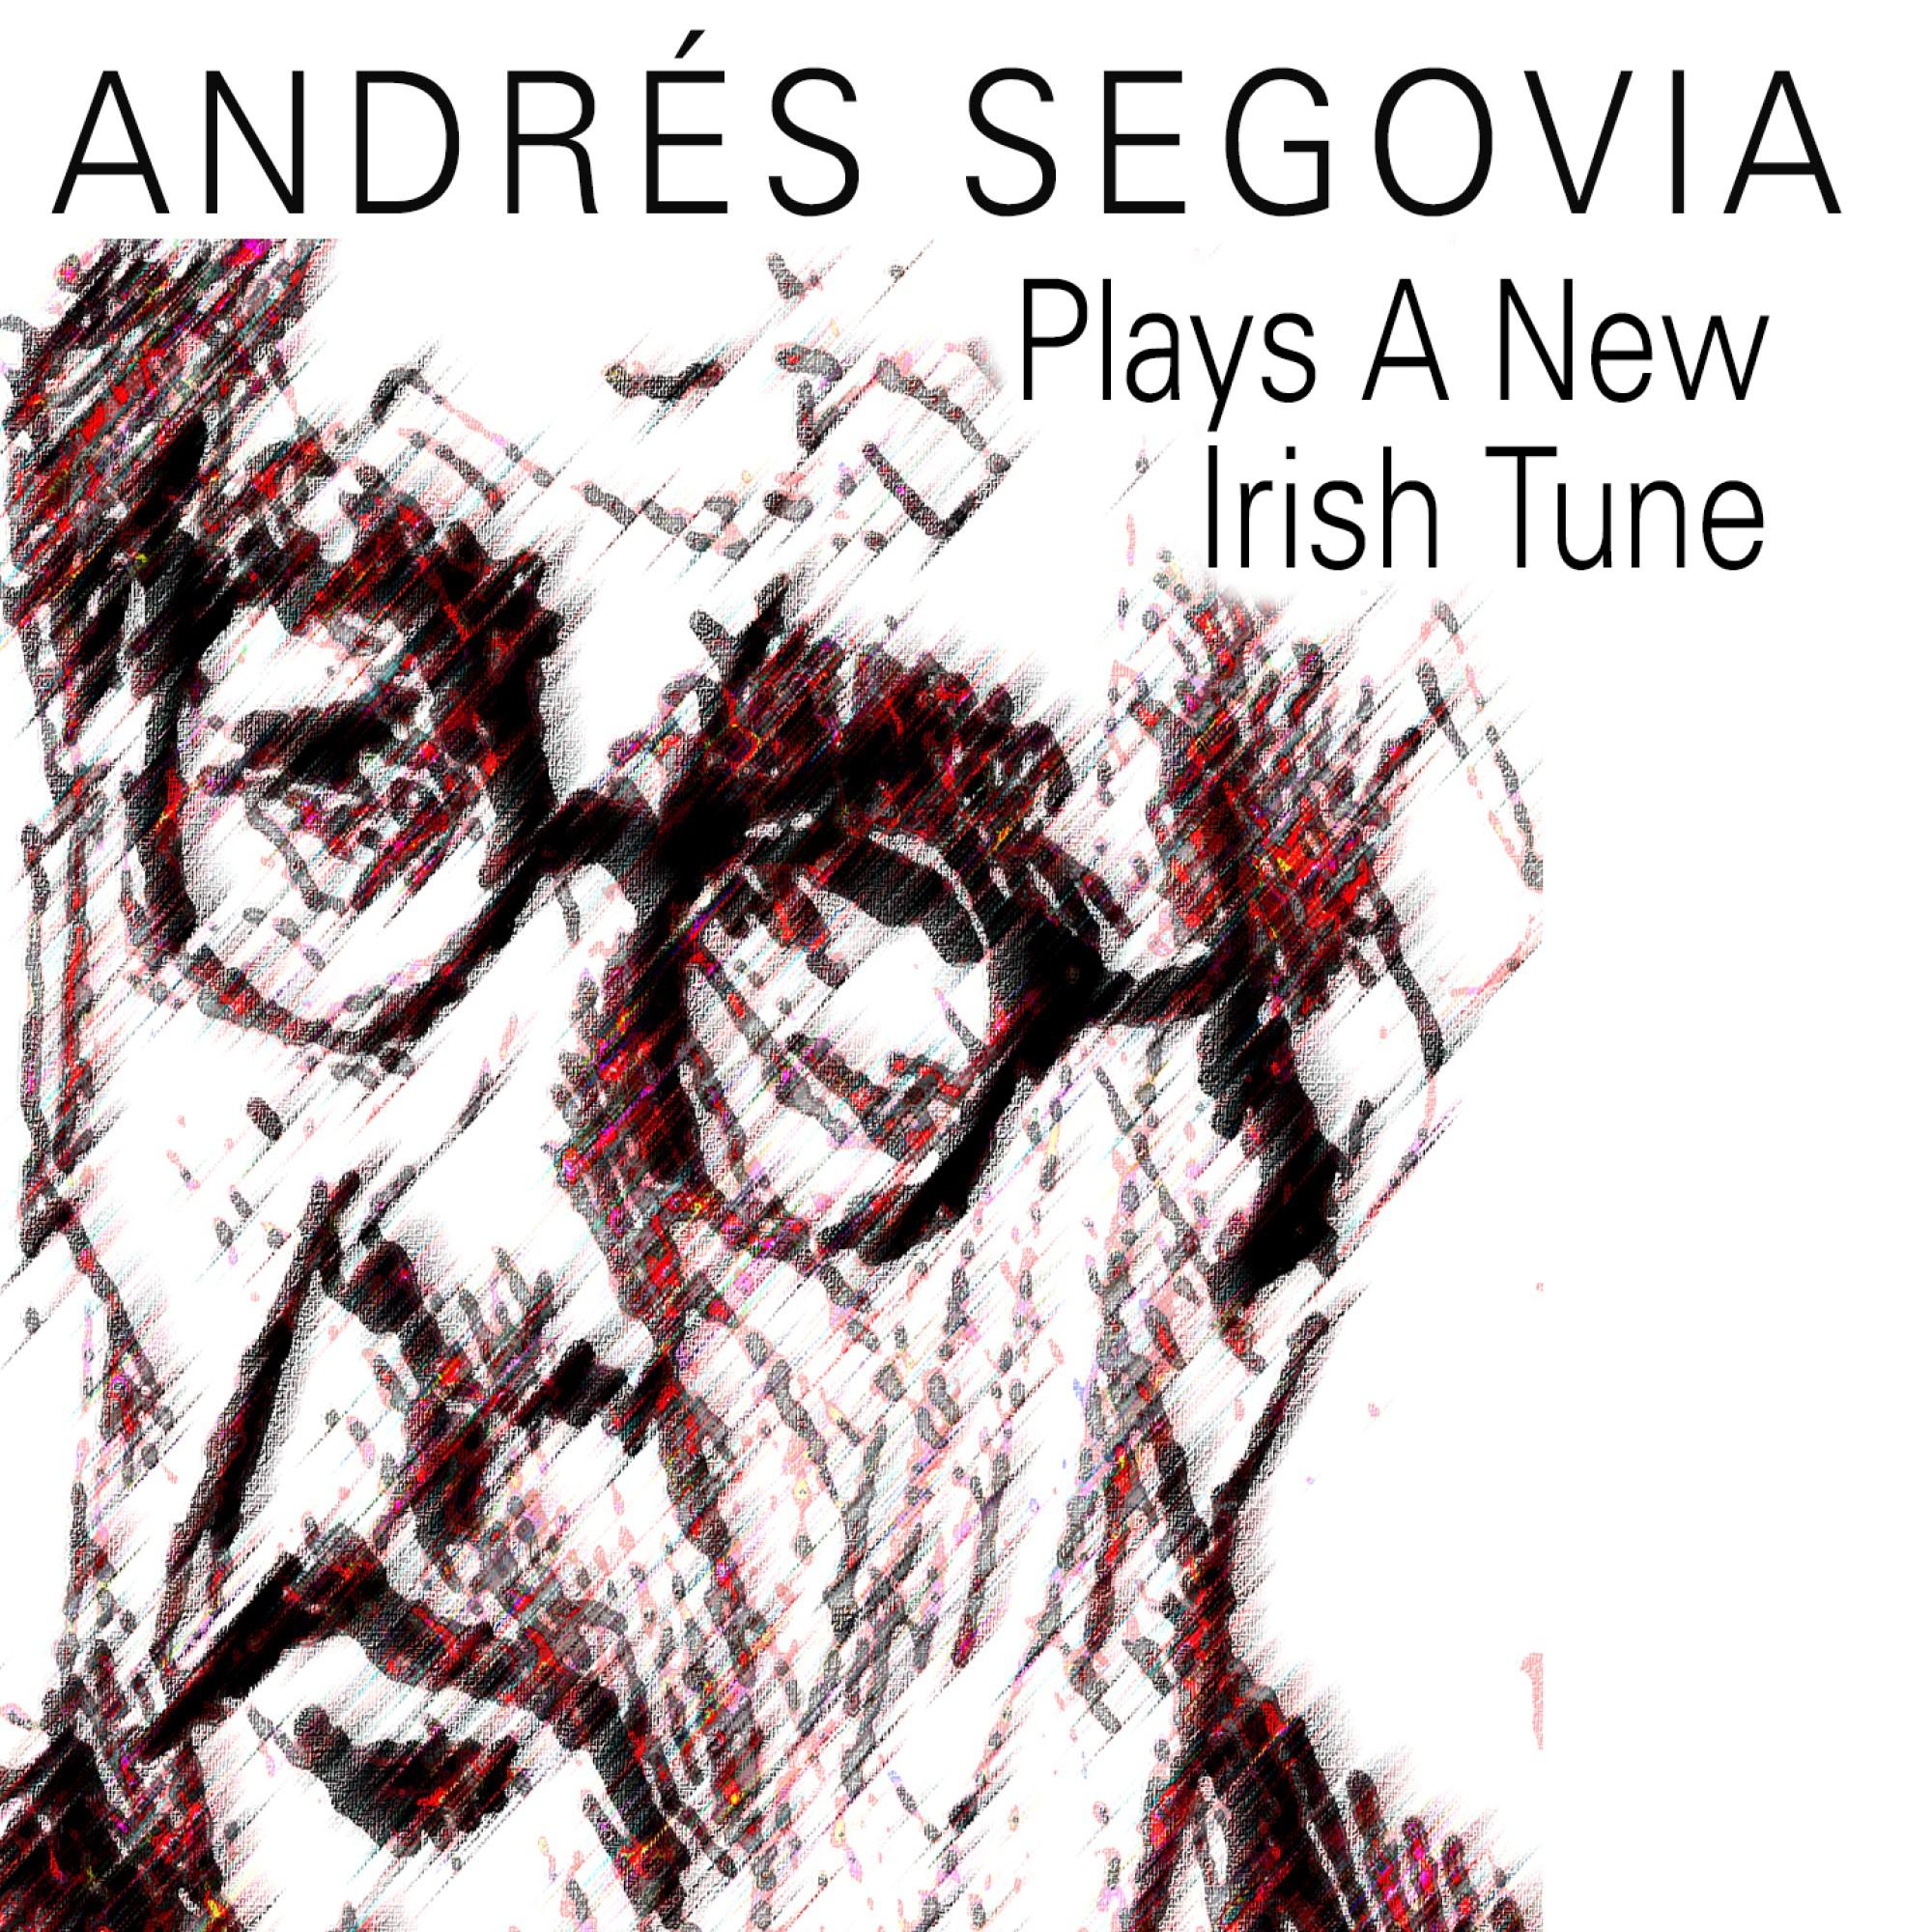 Andre s Segovia Plays A New Irish Tune